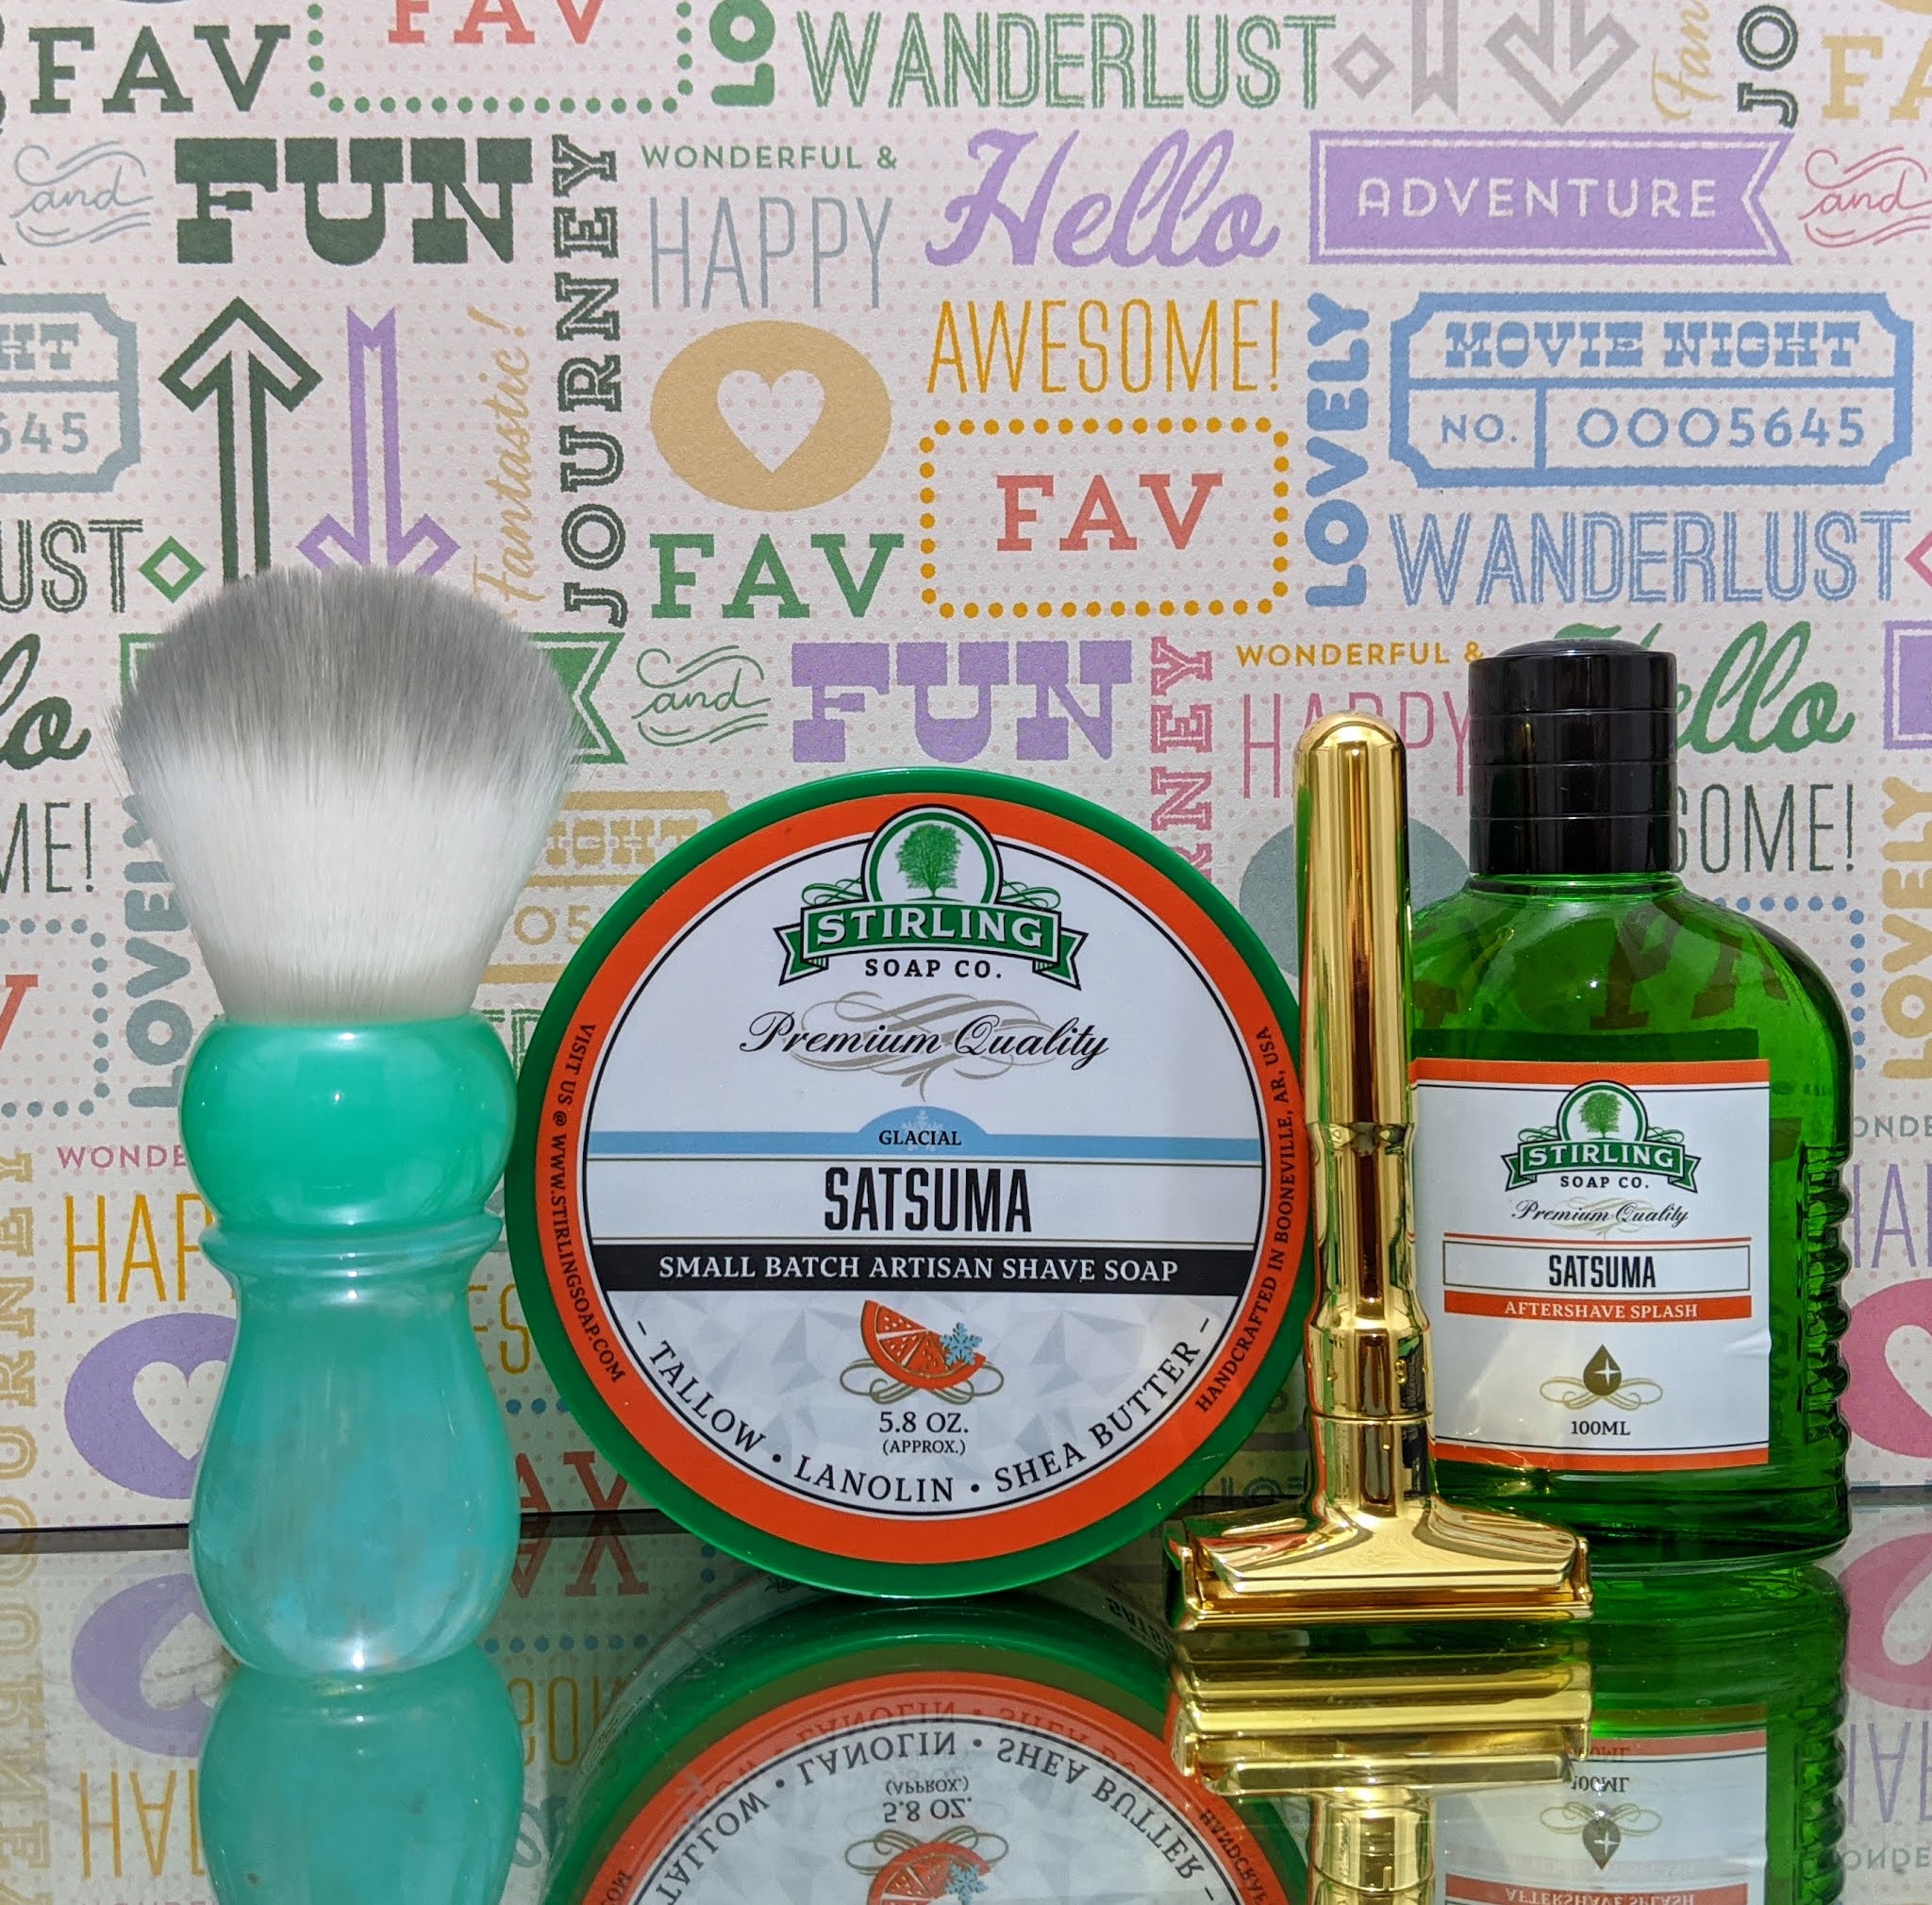 merkur-futur-stirling-satsuma-soap-and-aftershave-artisan-shaving